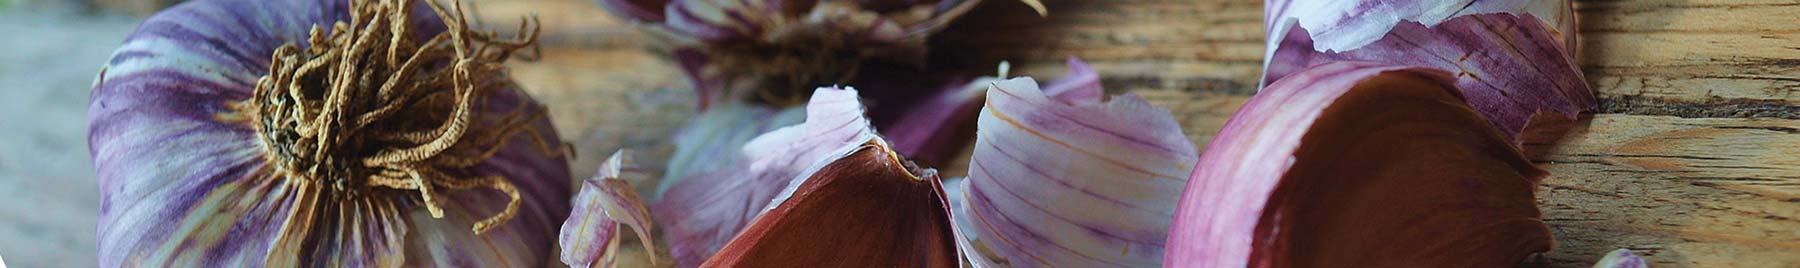 Purple onions on a wooden cutting board.